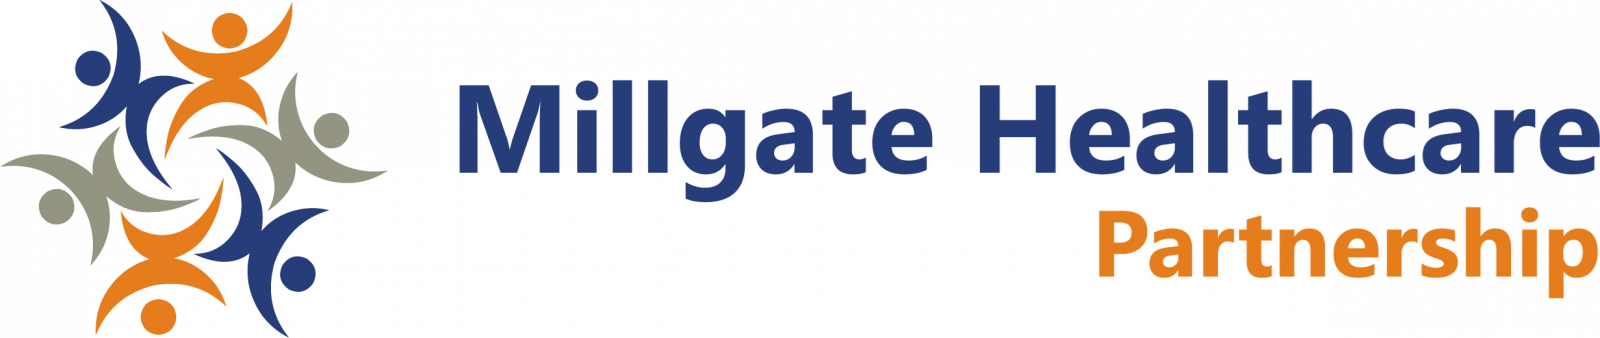 Millgate Healthcare Partnership Logo